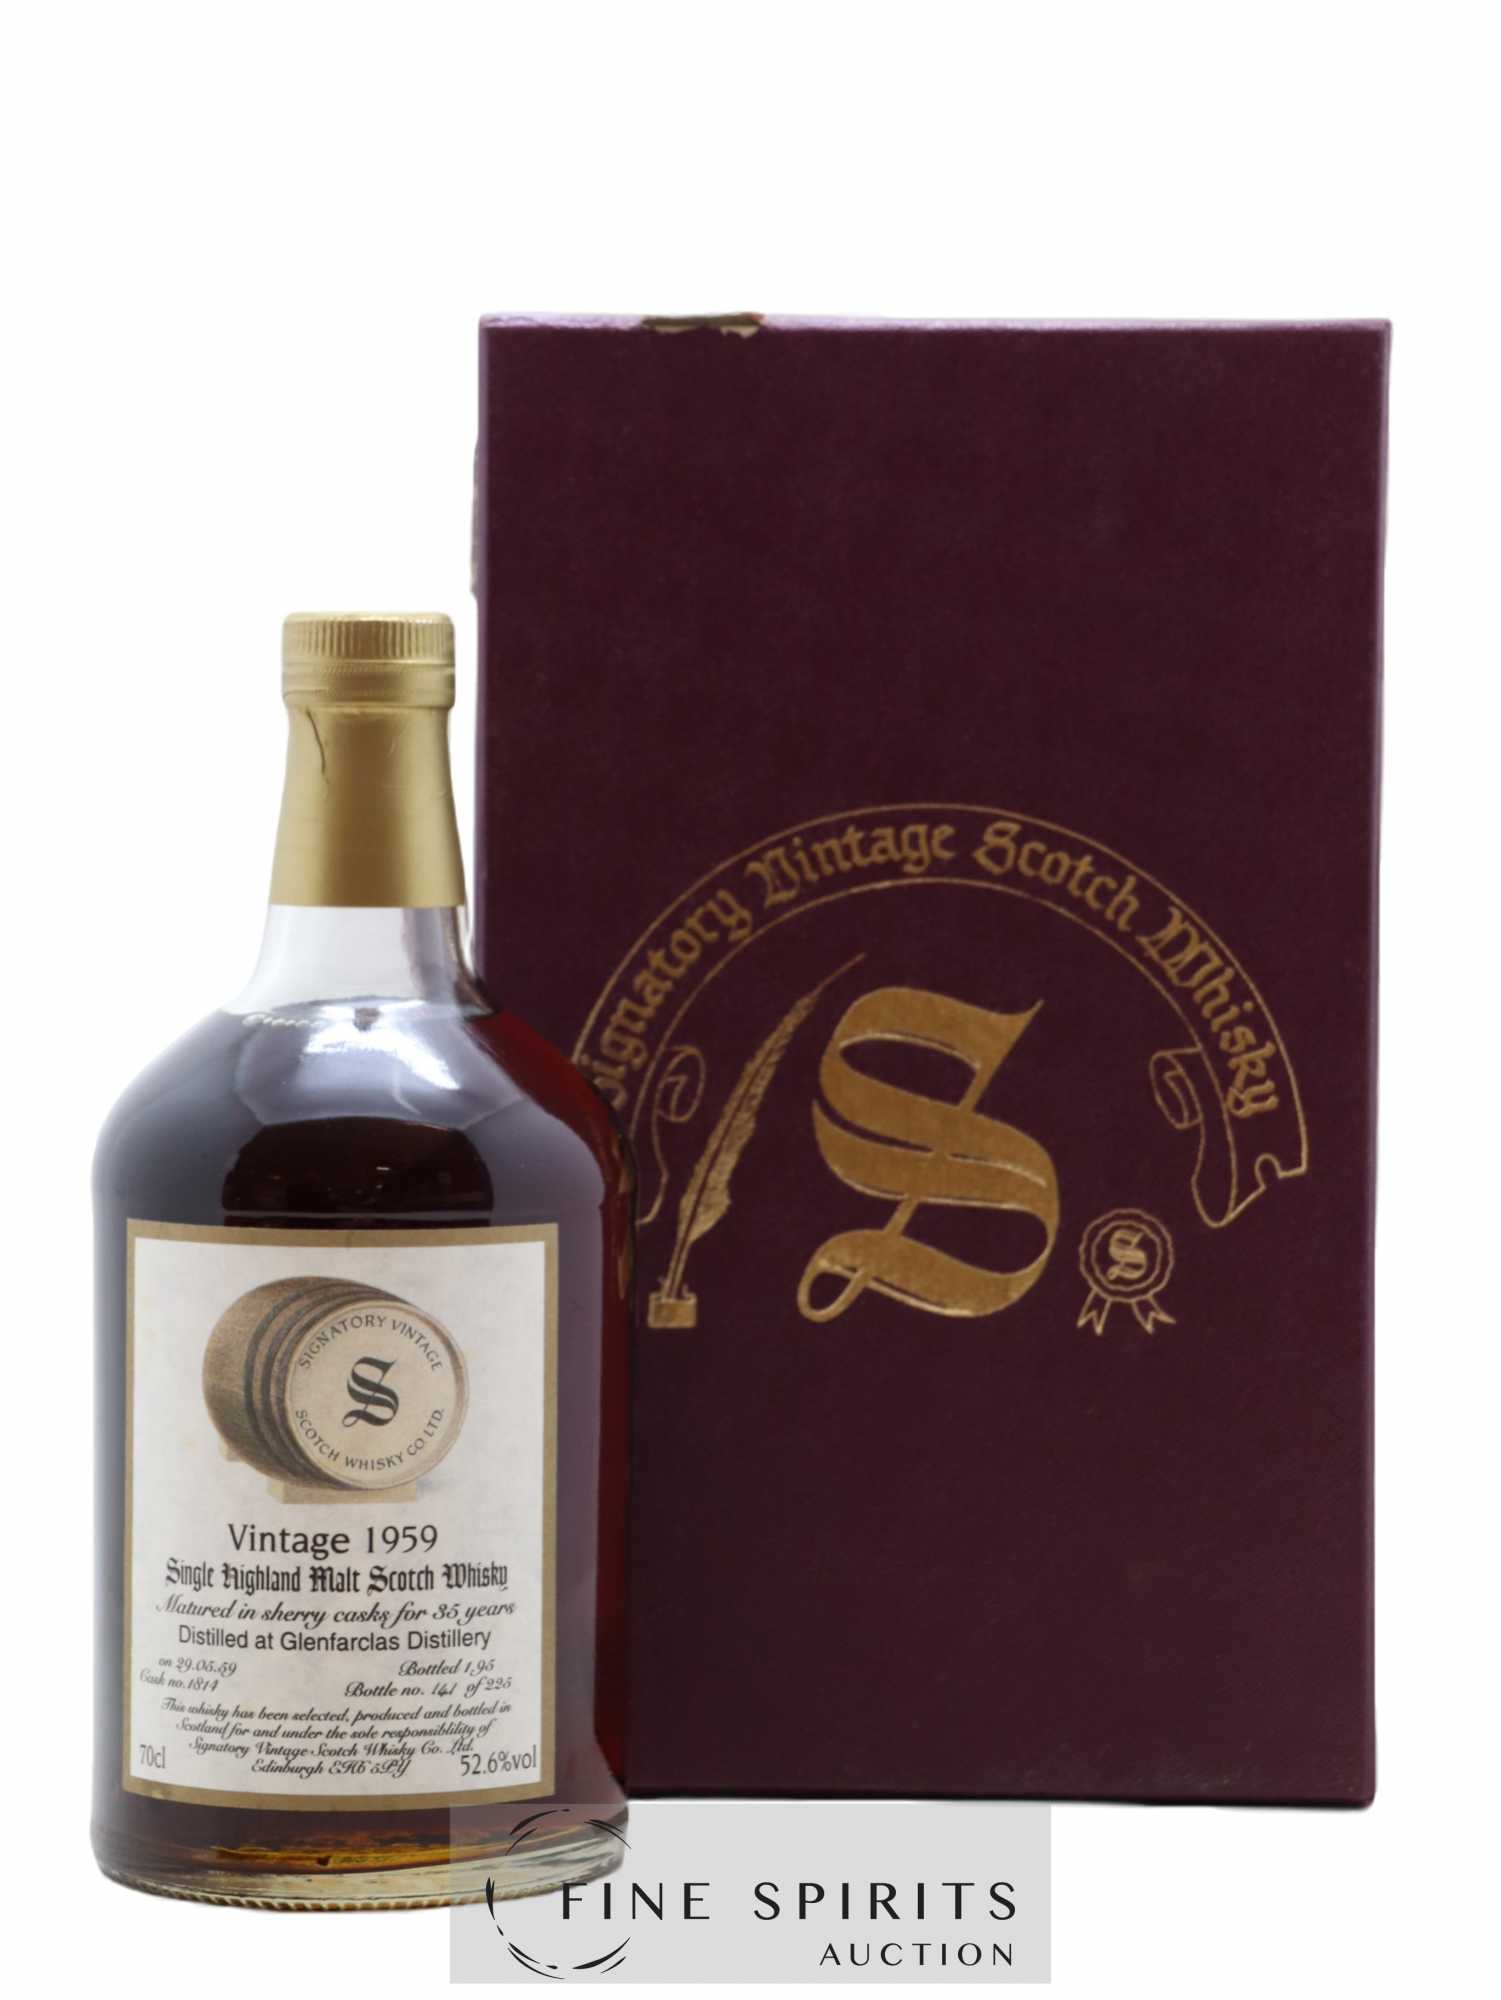 Glenfarclas 35 years 1959 Signatory Vintage Sherry Cask n°1814 - One of 225 - bottled 1995 